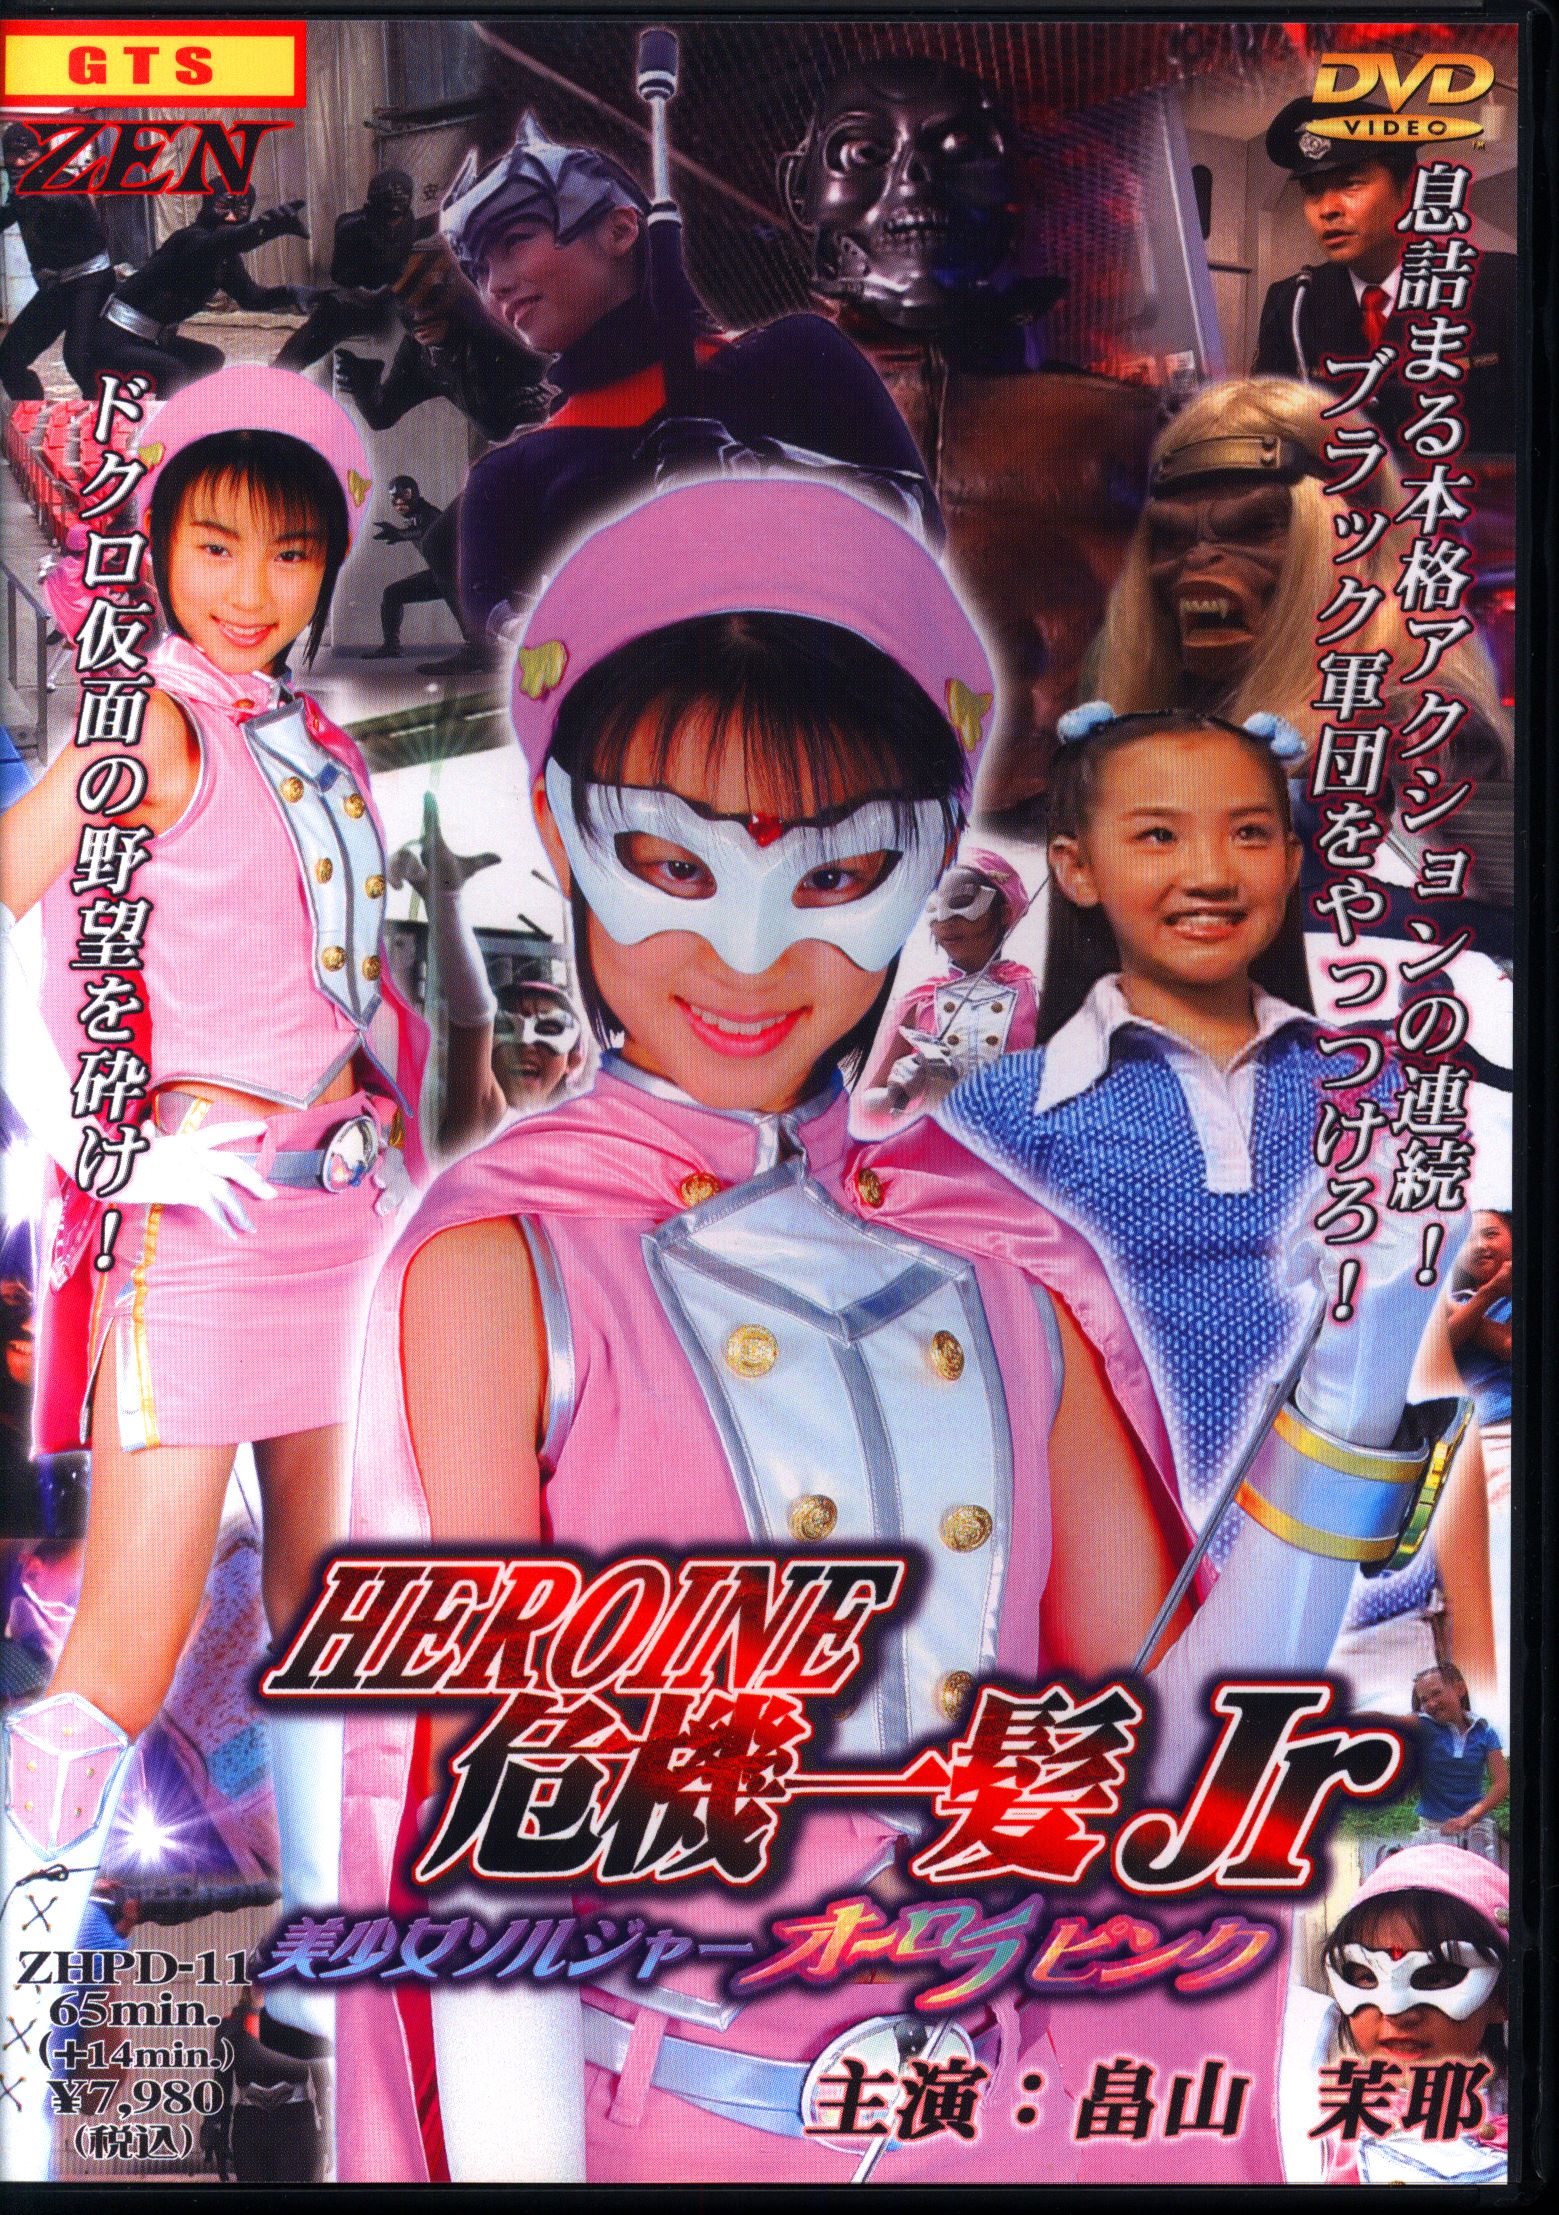 HEROINE危機一髪Jr 美少女ソルジャーオーロラブルー - DVD/ブルーレイ